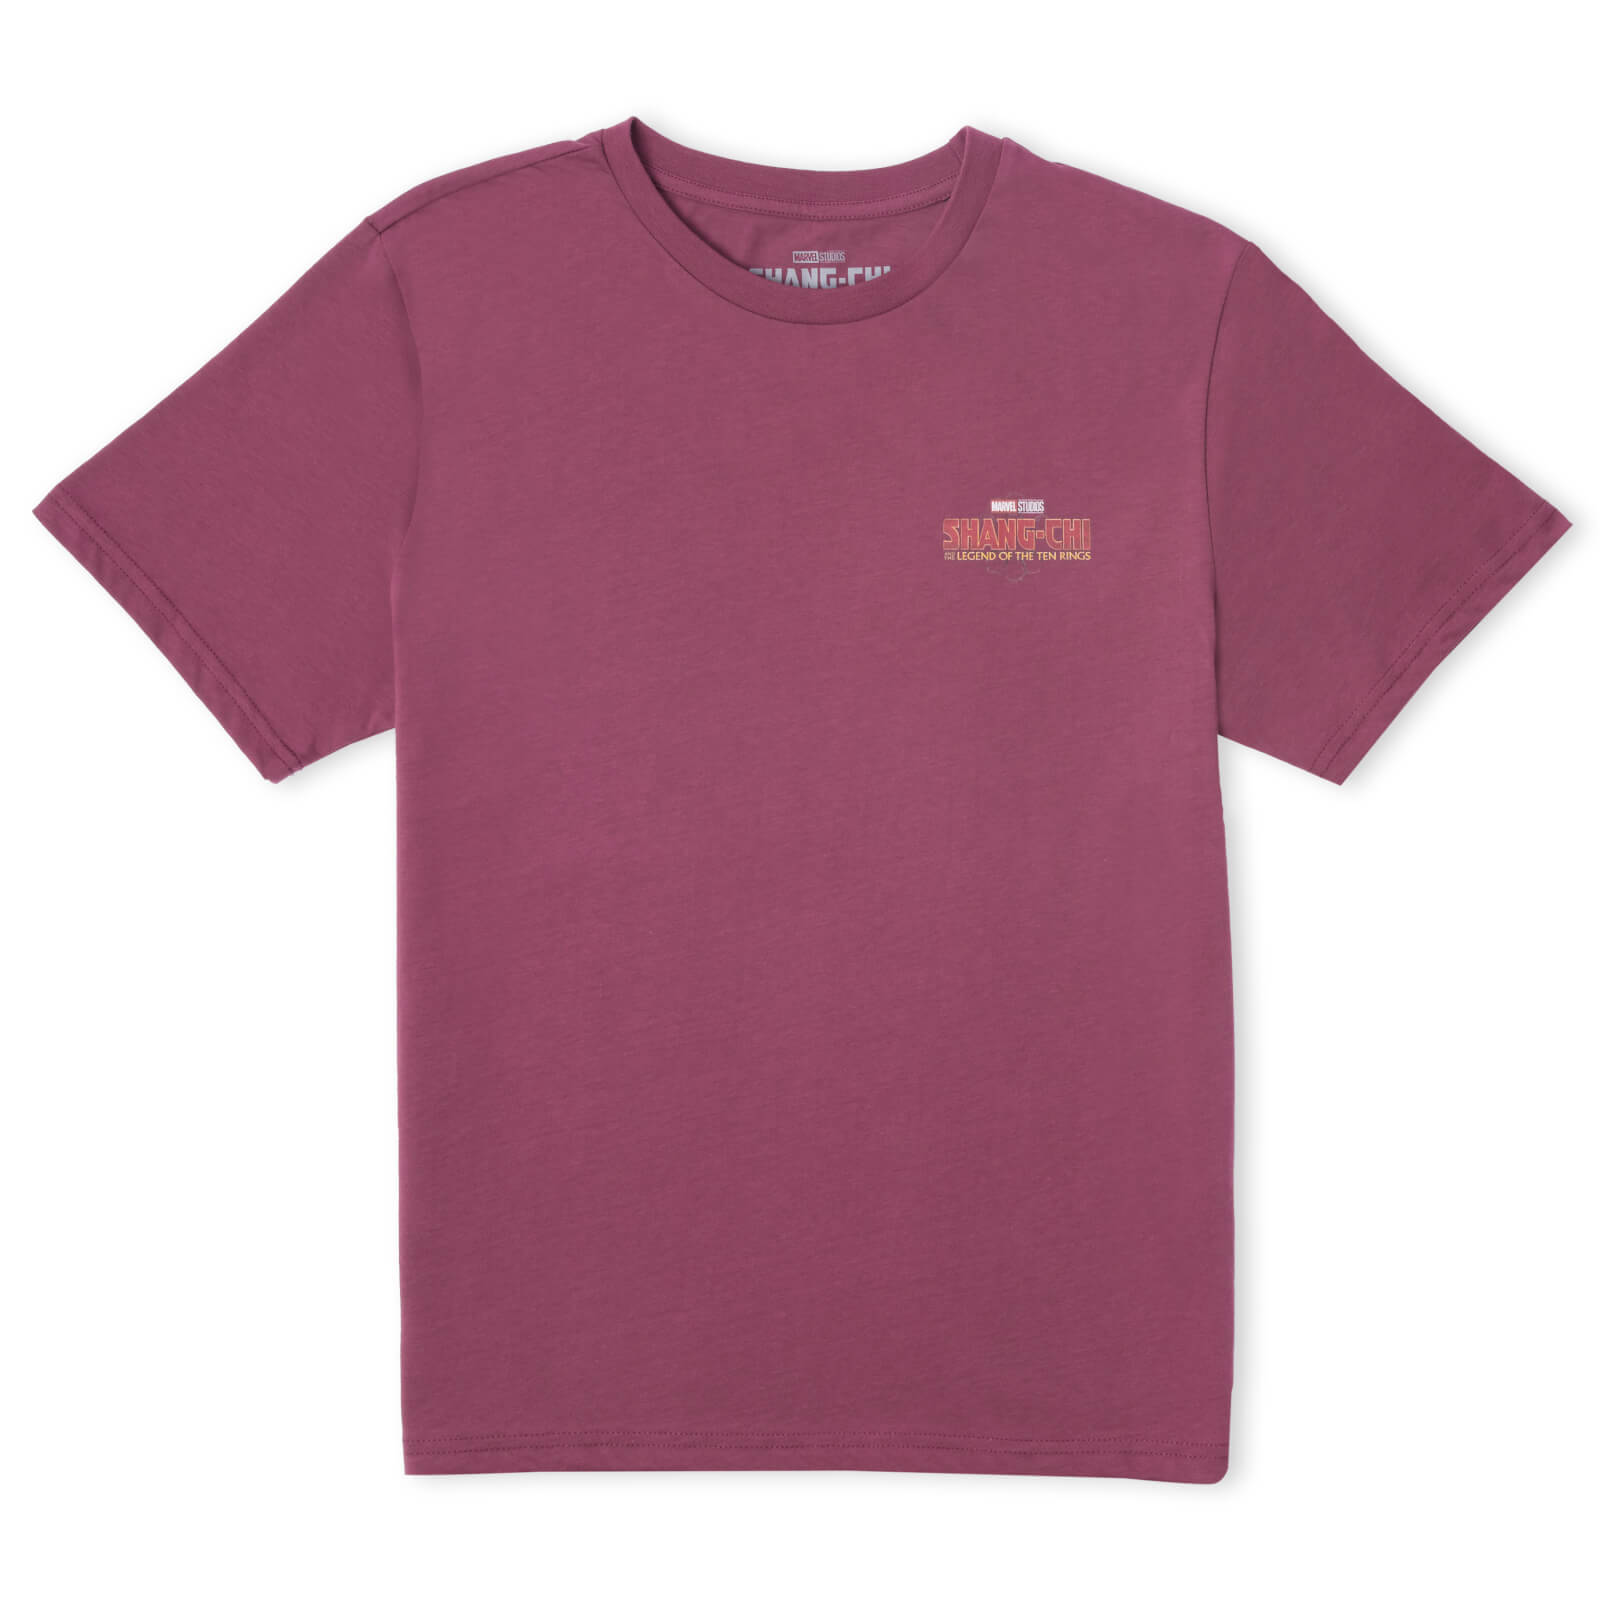 Shang-Chi Icon Men's T-Shirt - Burgundy - XS - Burgundy